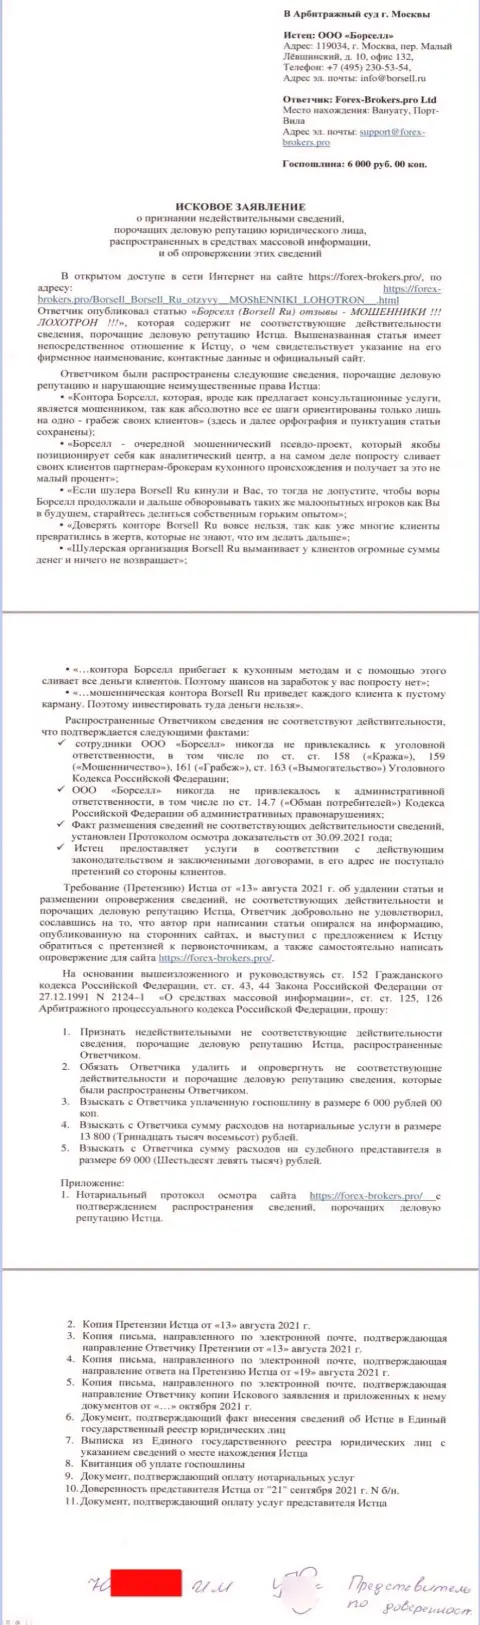 Непосредственно заявление в суд от представителя аналитического центра Borsell Ru